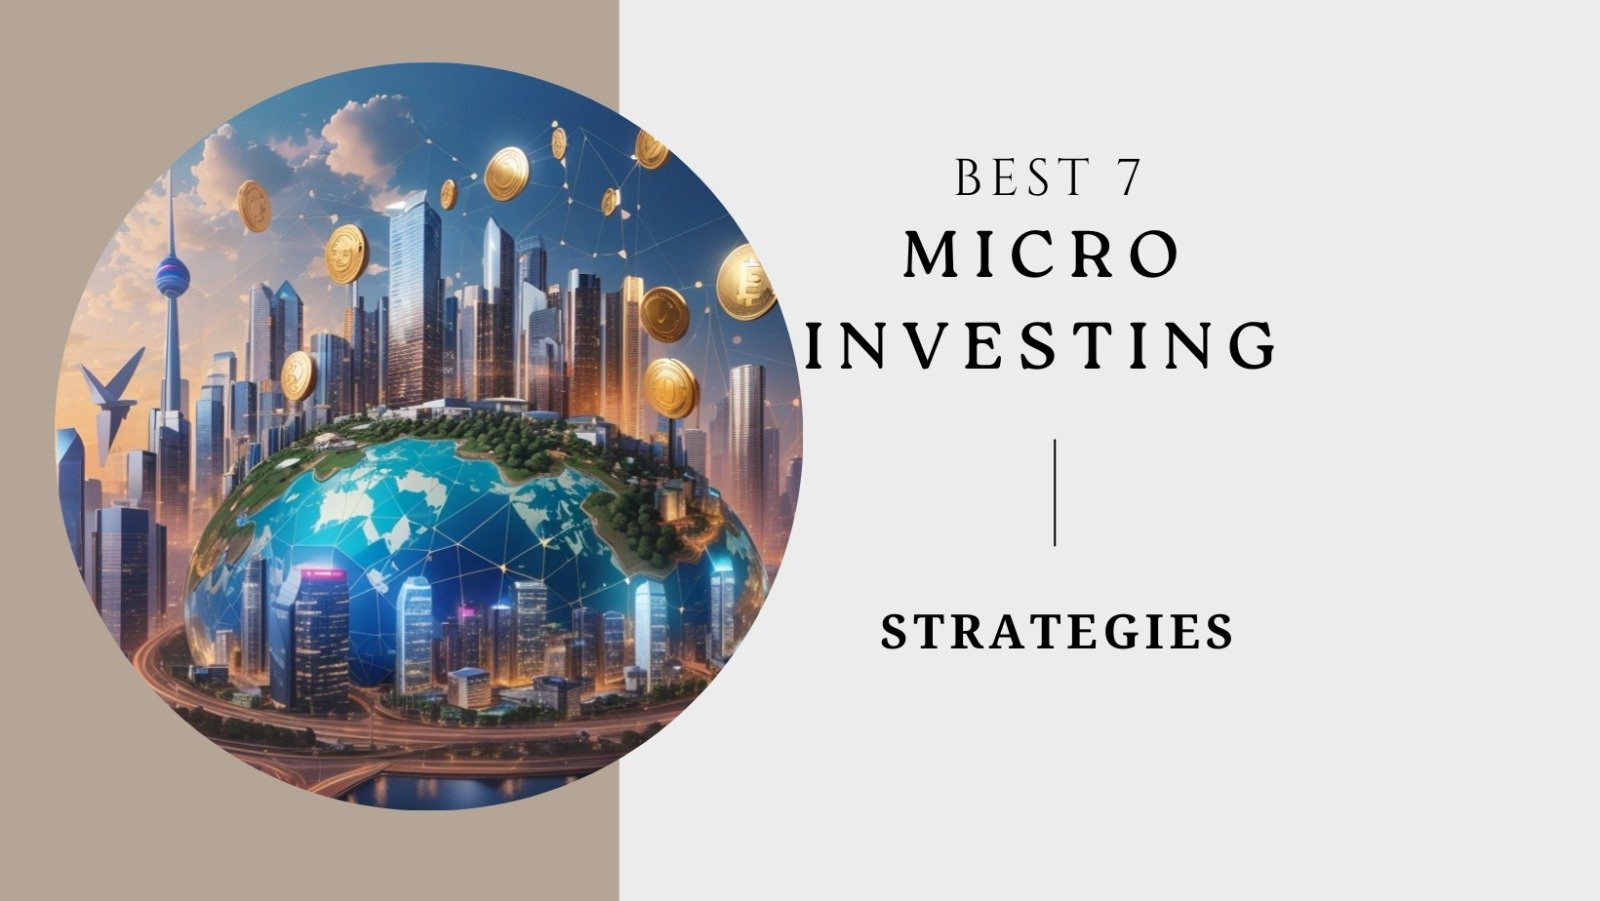 Best 7 Micro Investing Strategies